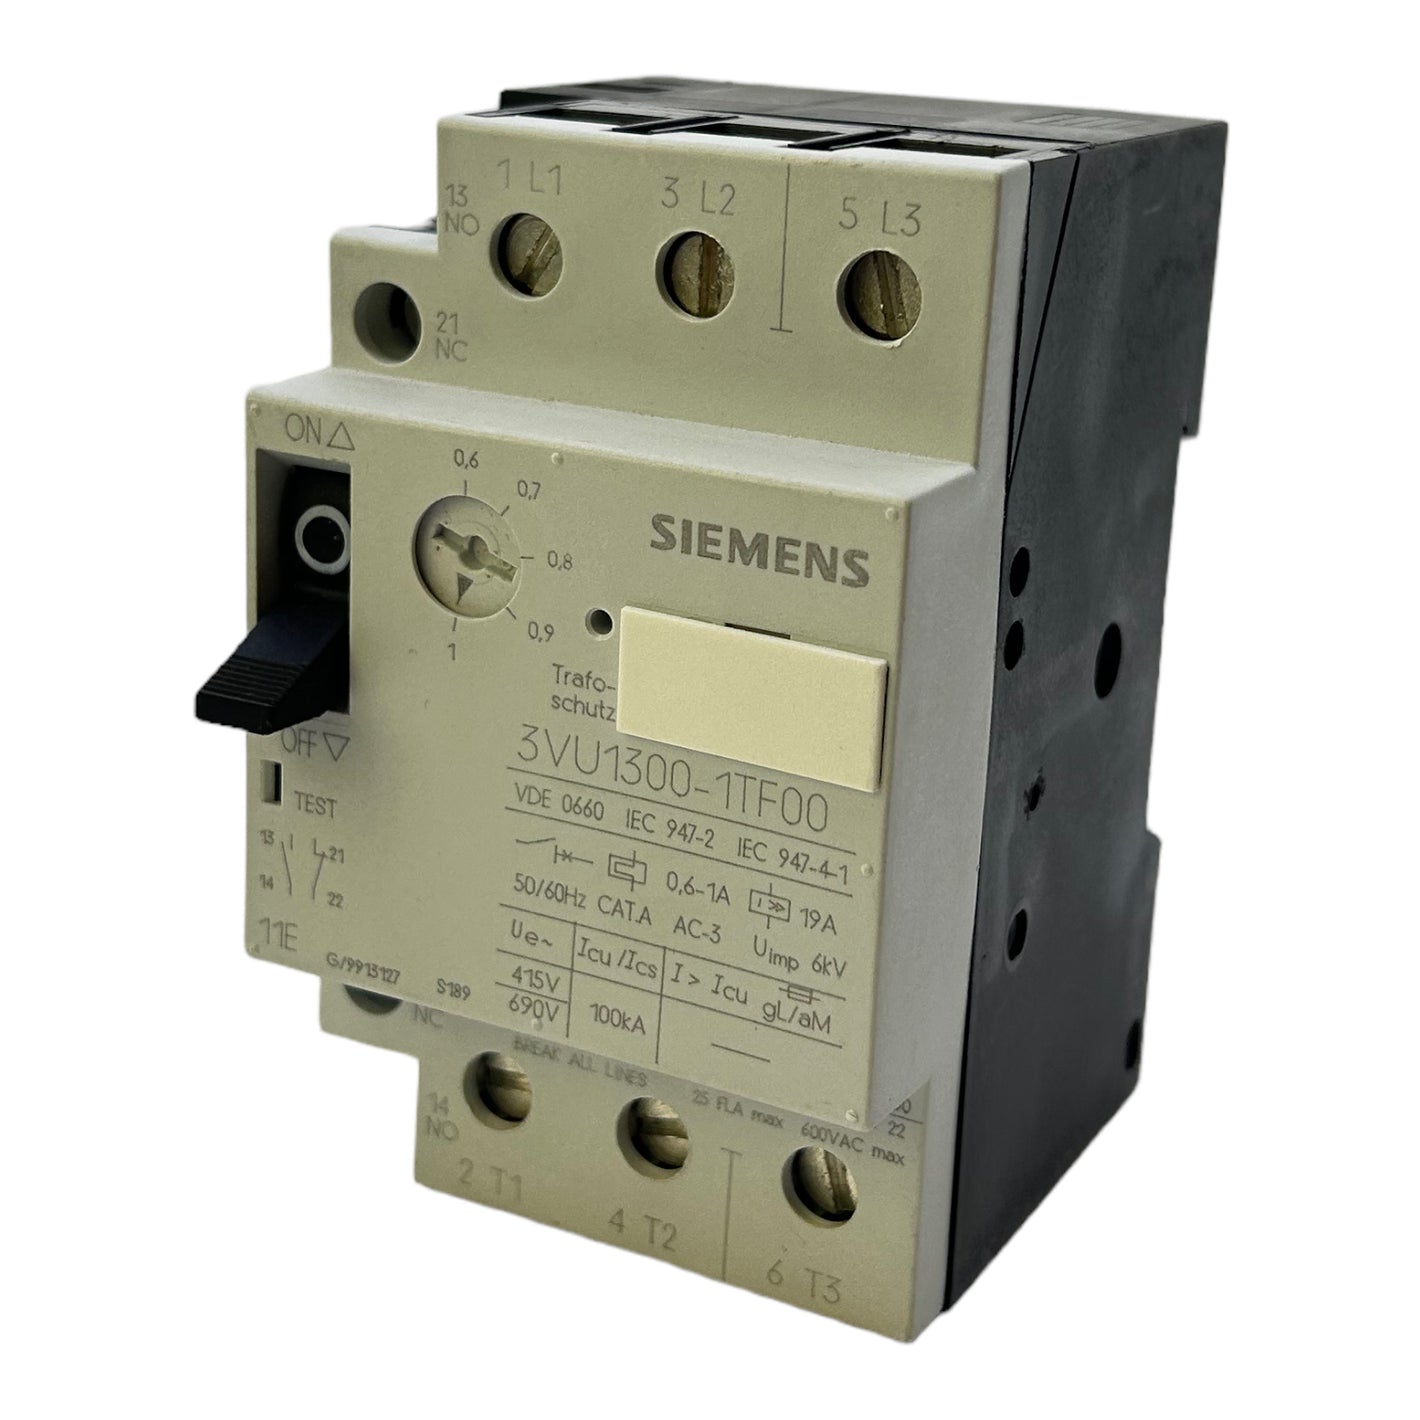 Siemens 3VU1300-1TF00 circuit breaker 50/60Hz Siemens switch 